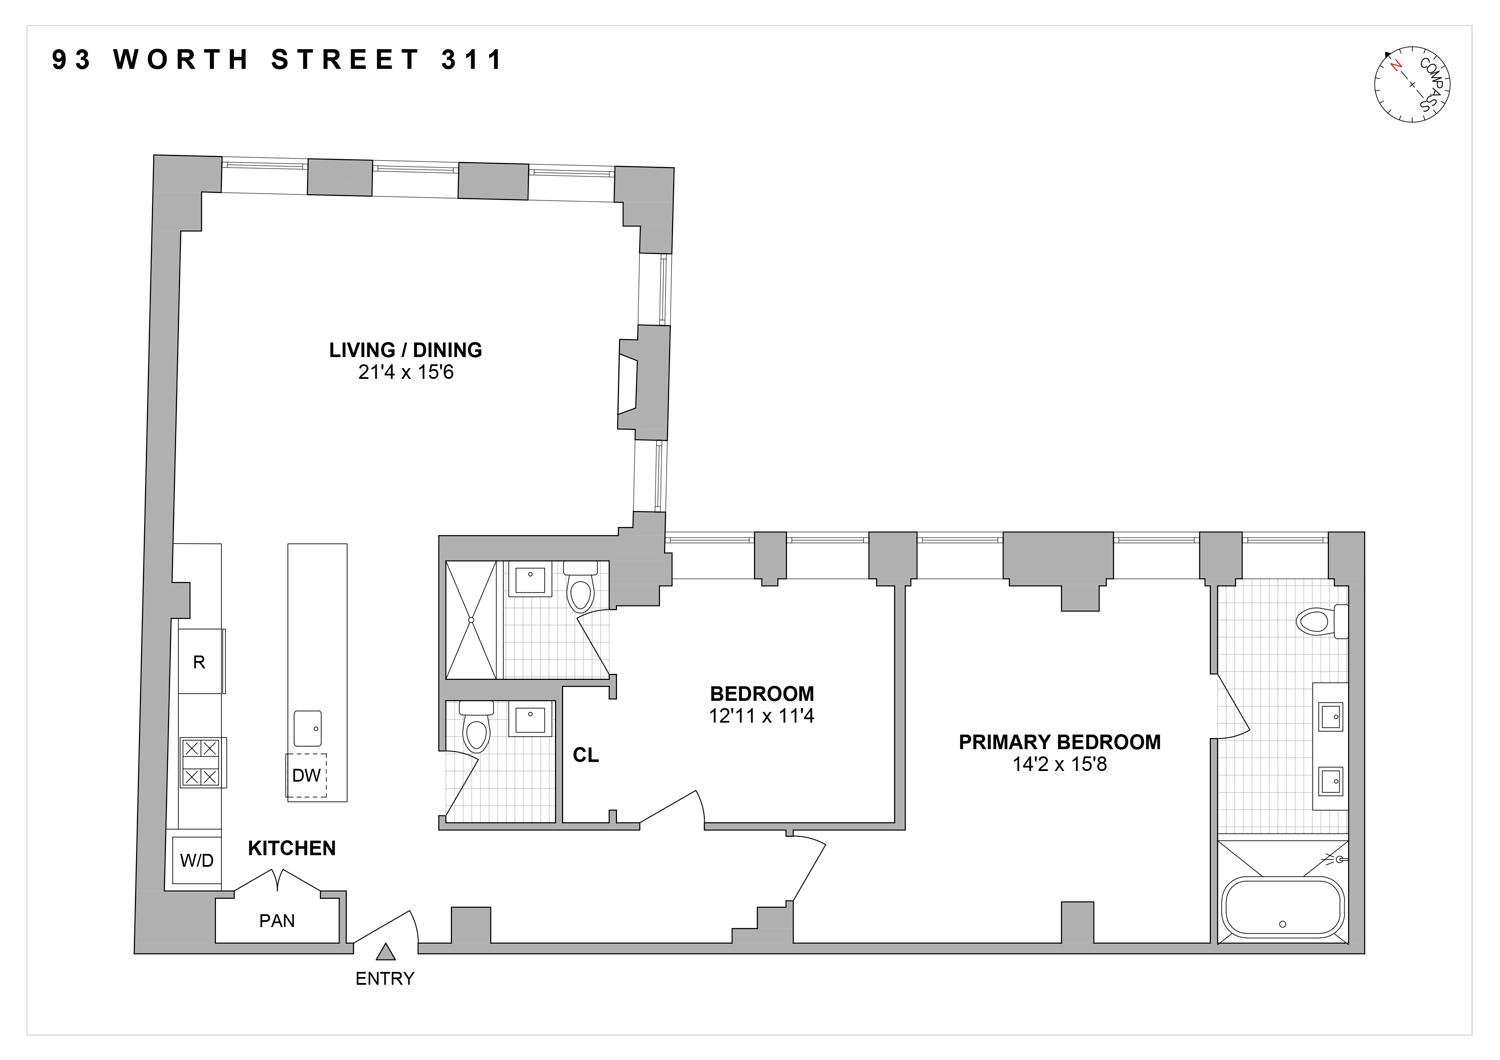 Floorplan for 93 Worth Street, 311